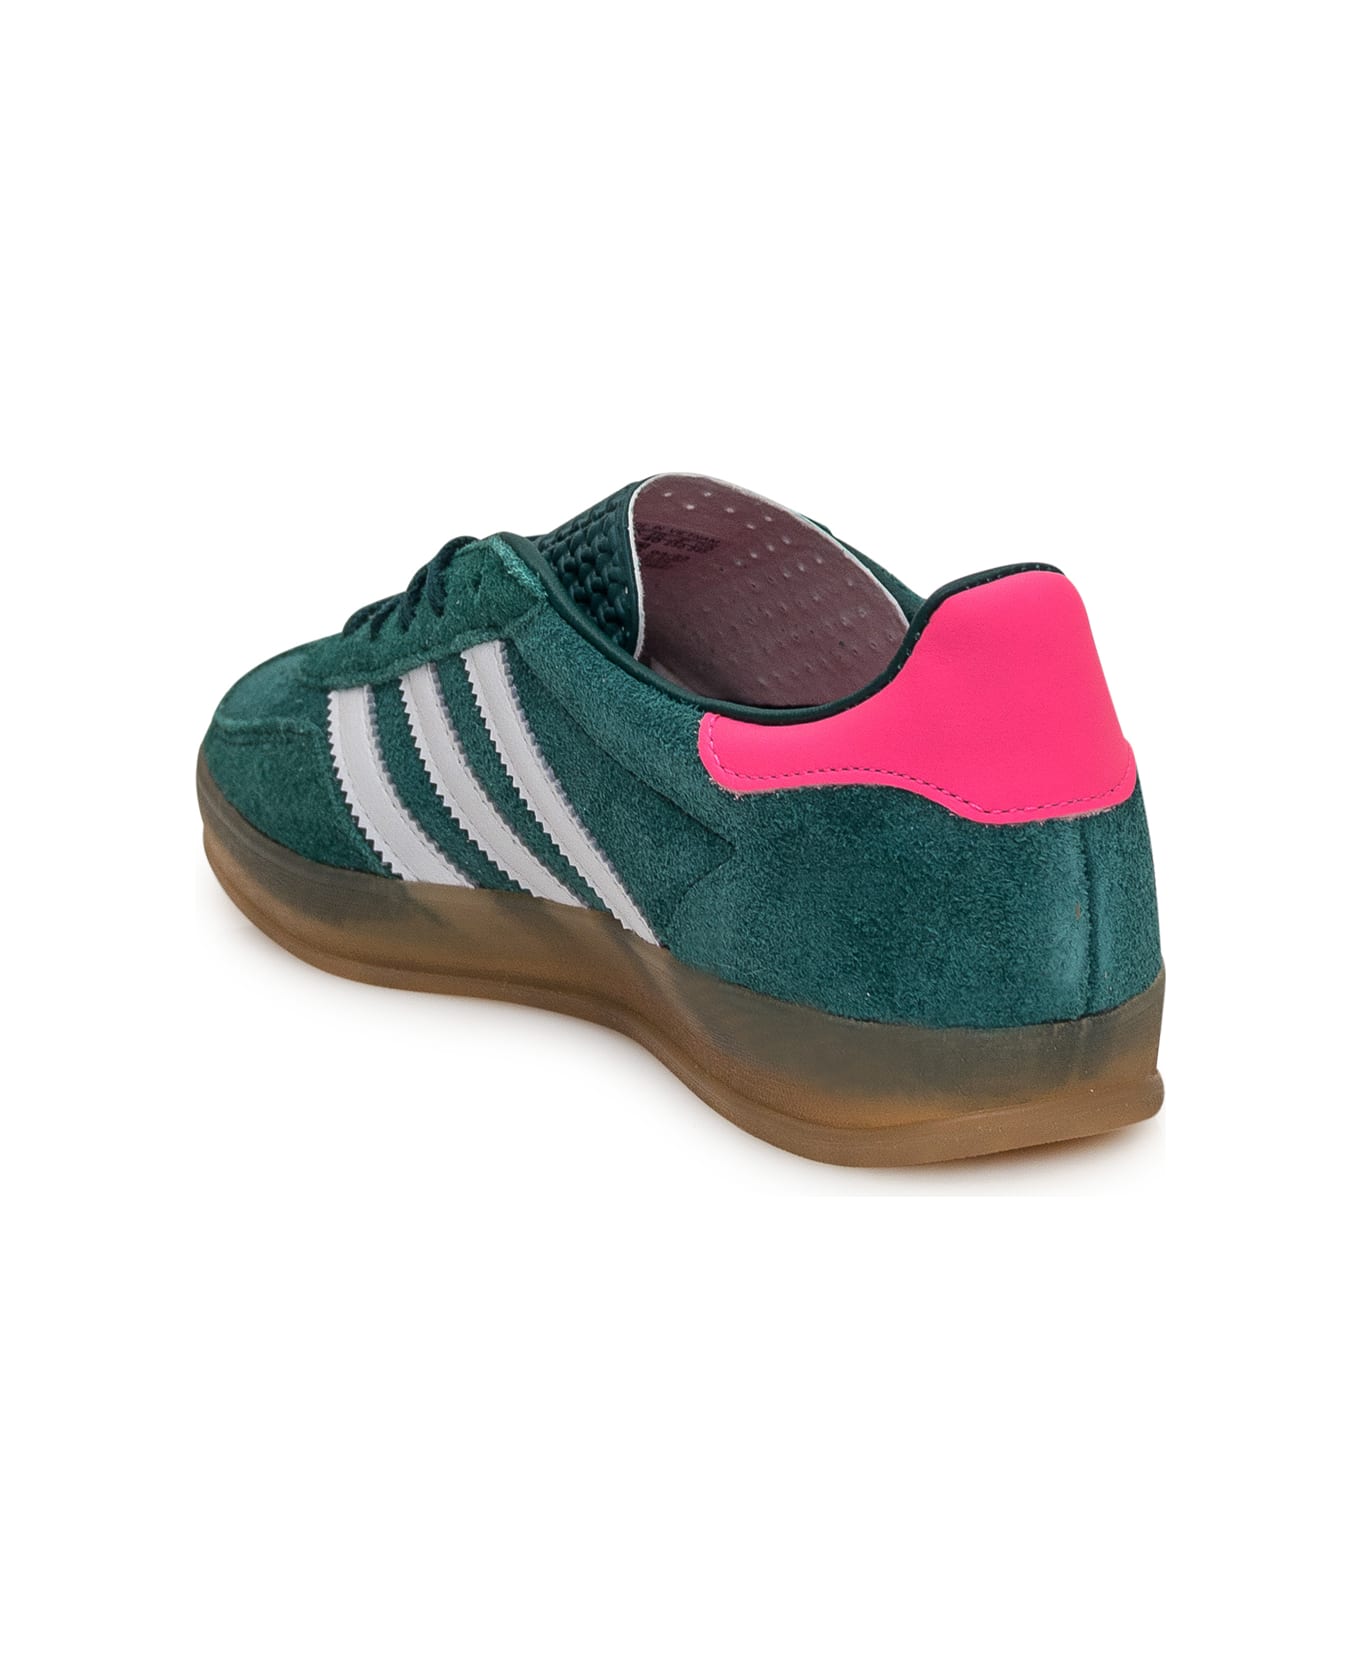 Adidas Originals Gazelle Sneaker - Green